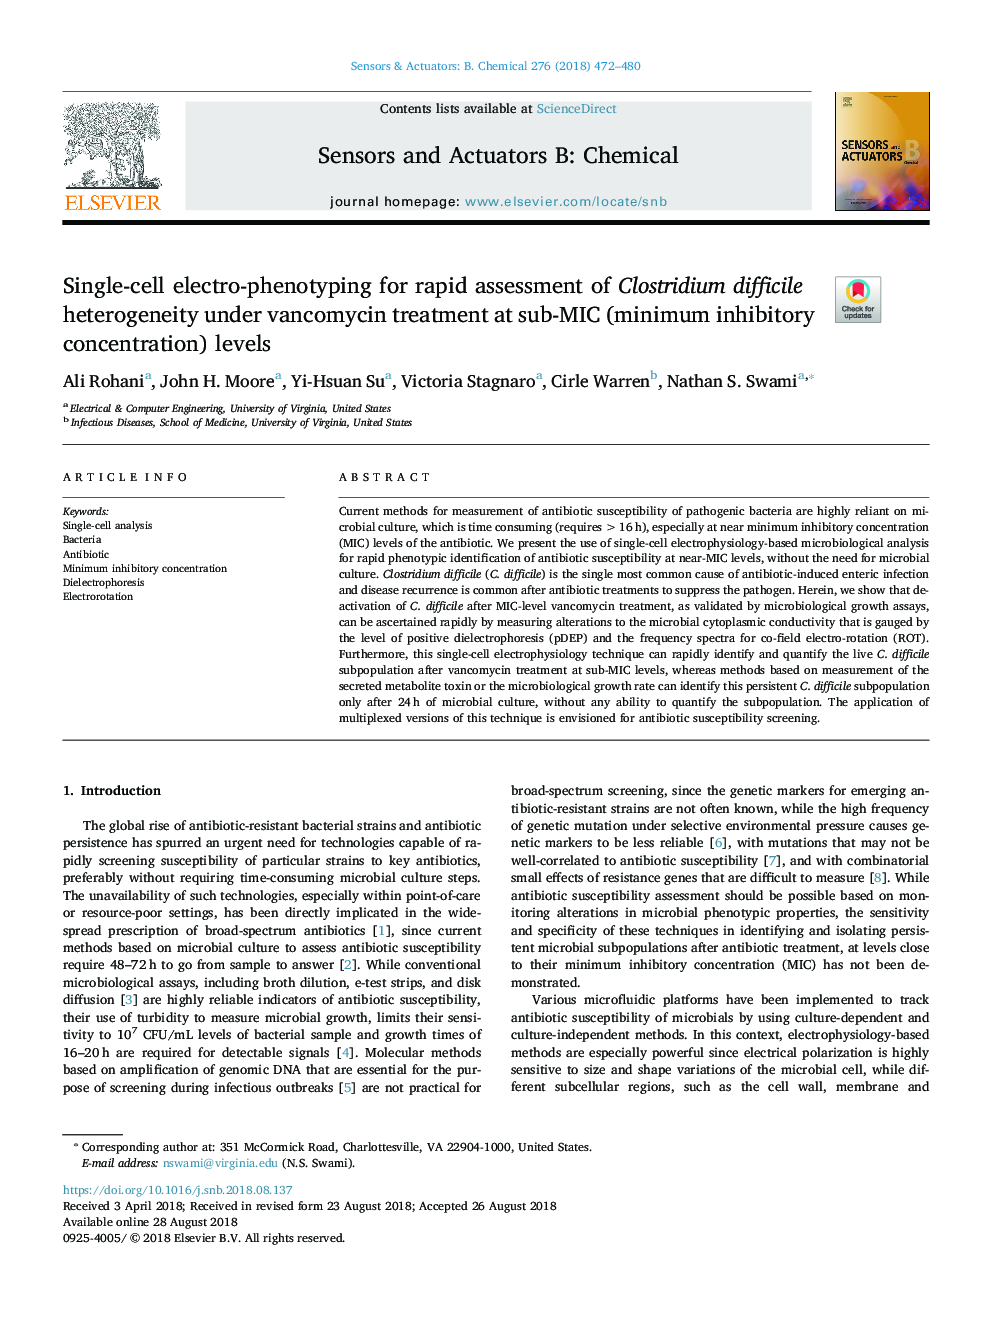 Single-cell electro-phenotyping for rapid assessment of Clostridium difficile heterogeneity under vancomycin treatment at sub-MIC (minimum inhibitory concentration) levels